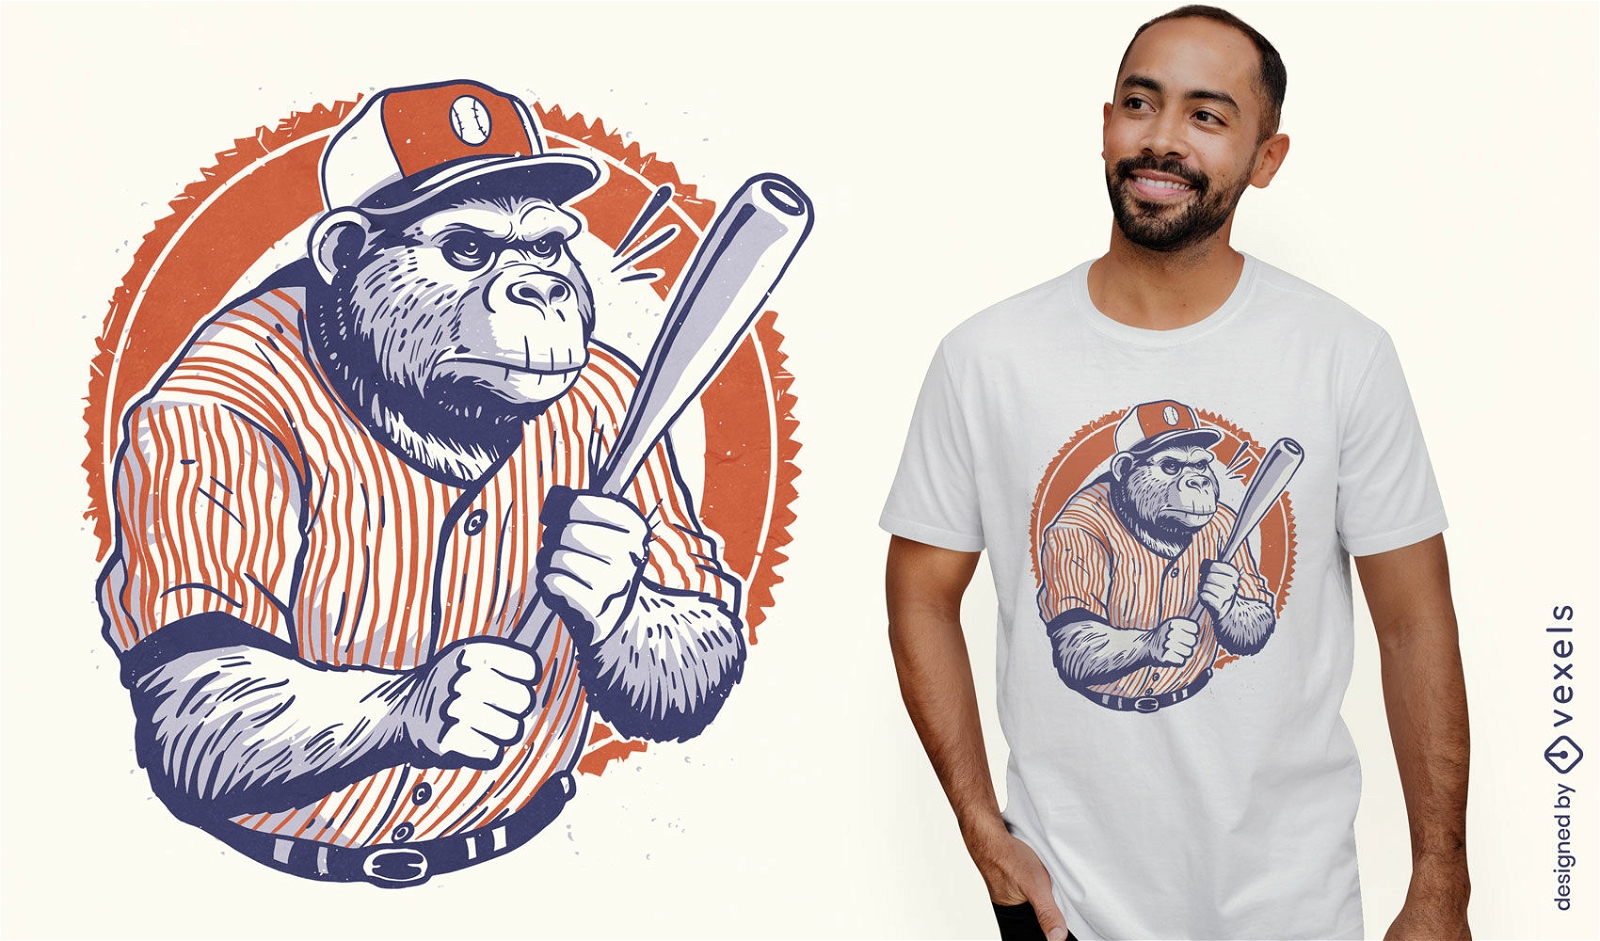 Dise?o de camiseta de gorila de jugador de b?isbol.